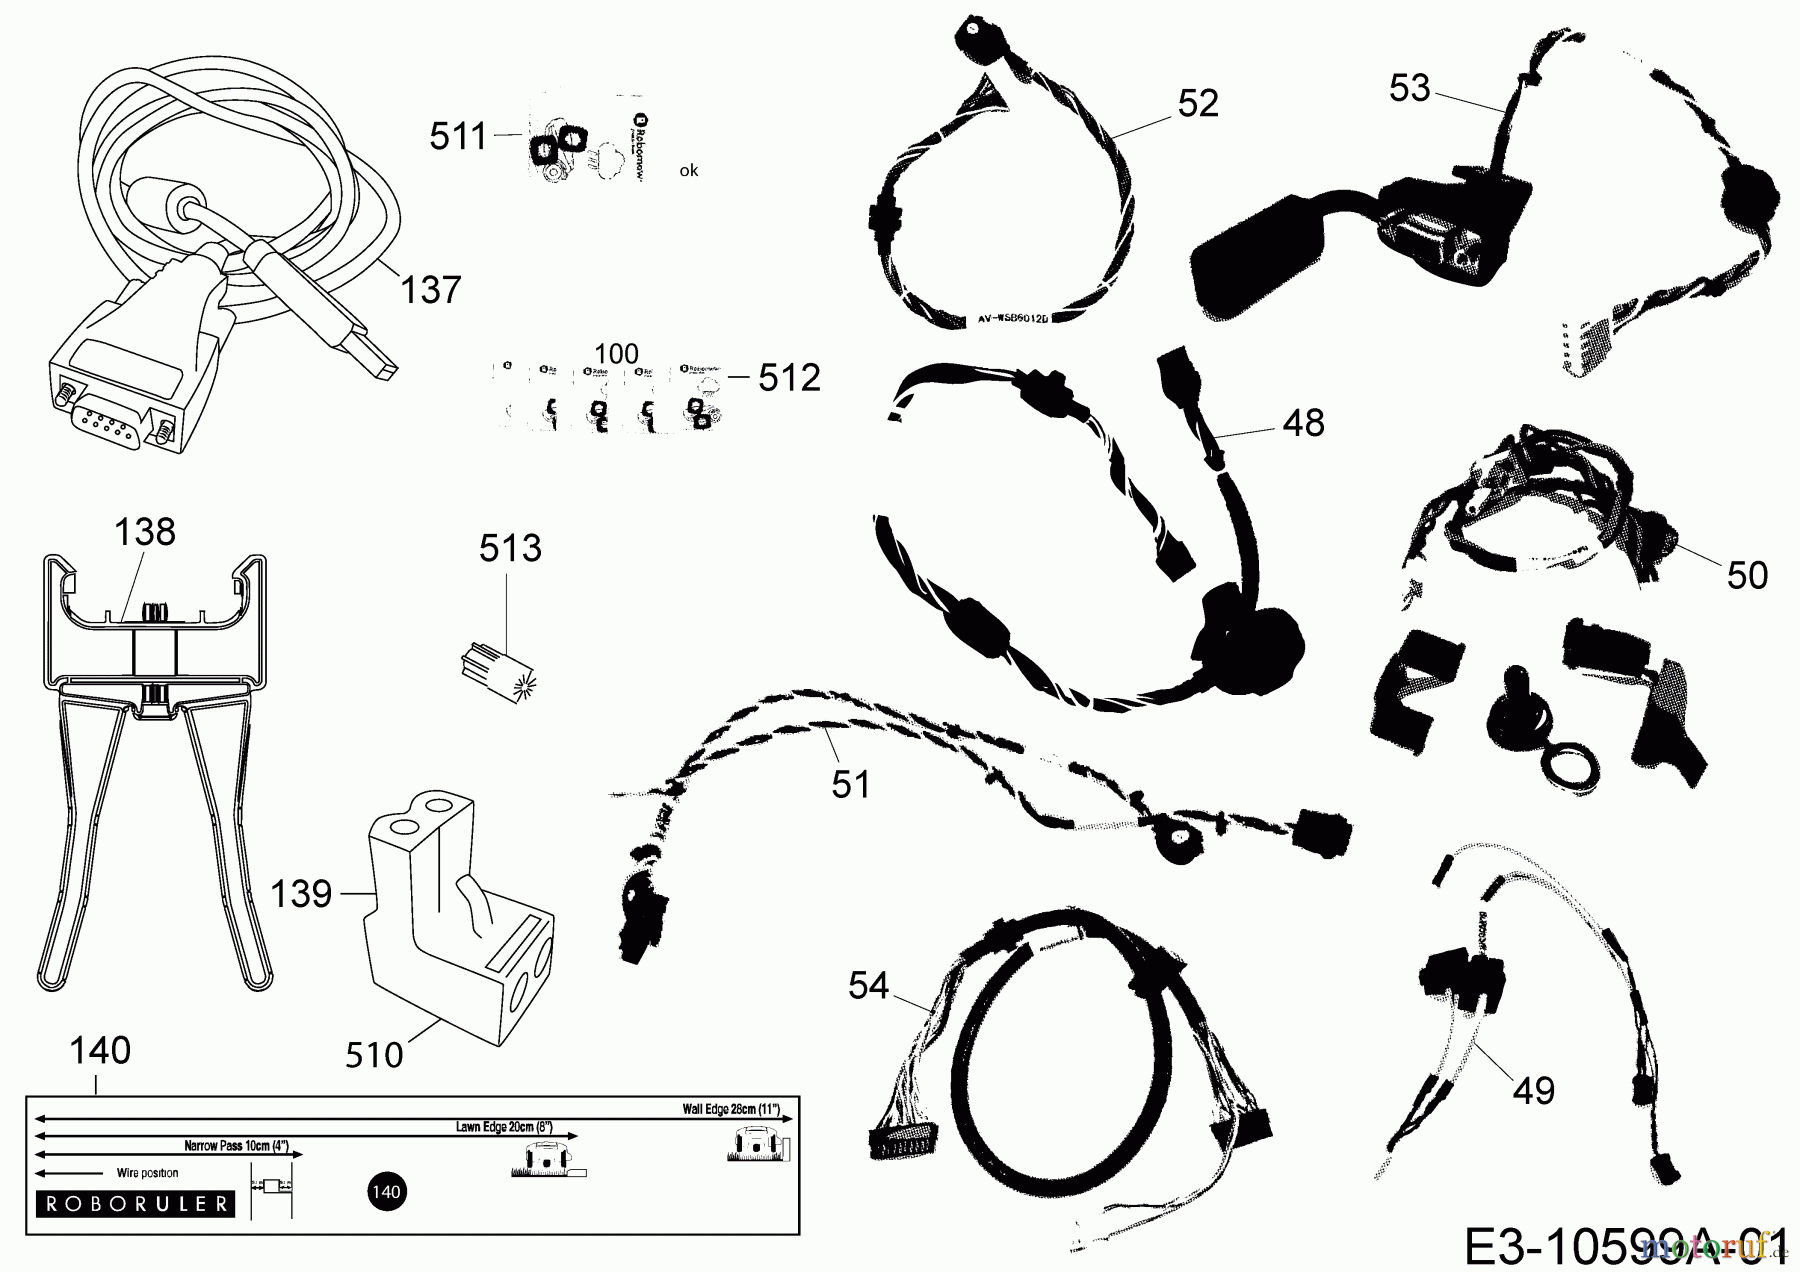  Robomow Mähroboter RS622 (White) PRD6200BW  (2015) Kabel, Kabelanschluß, Regensensor, Werkzeug